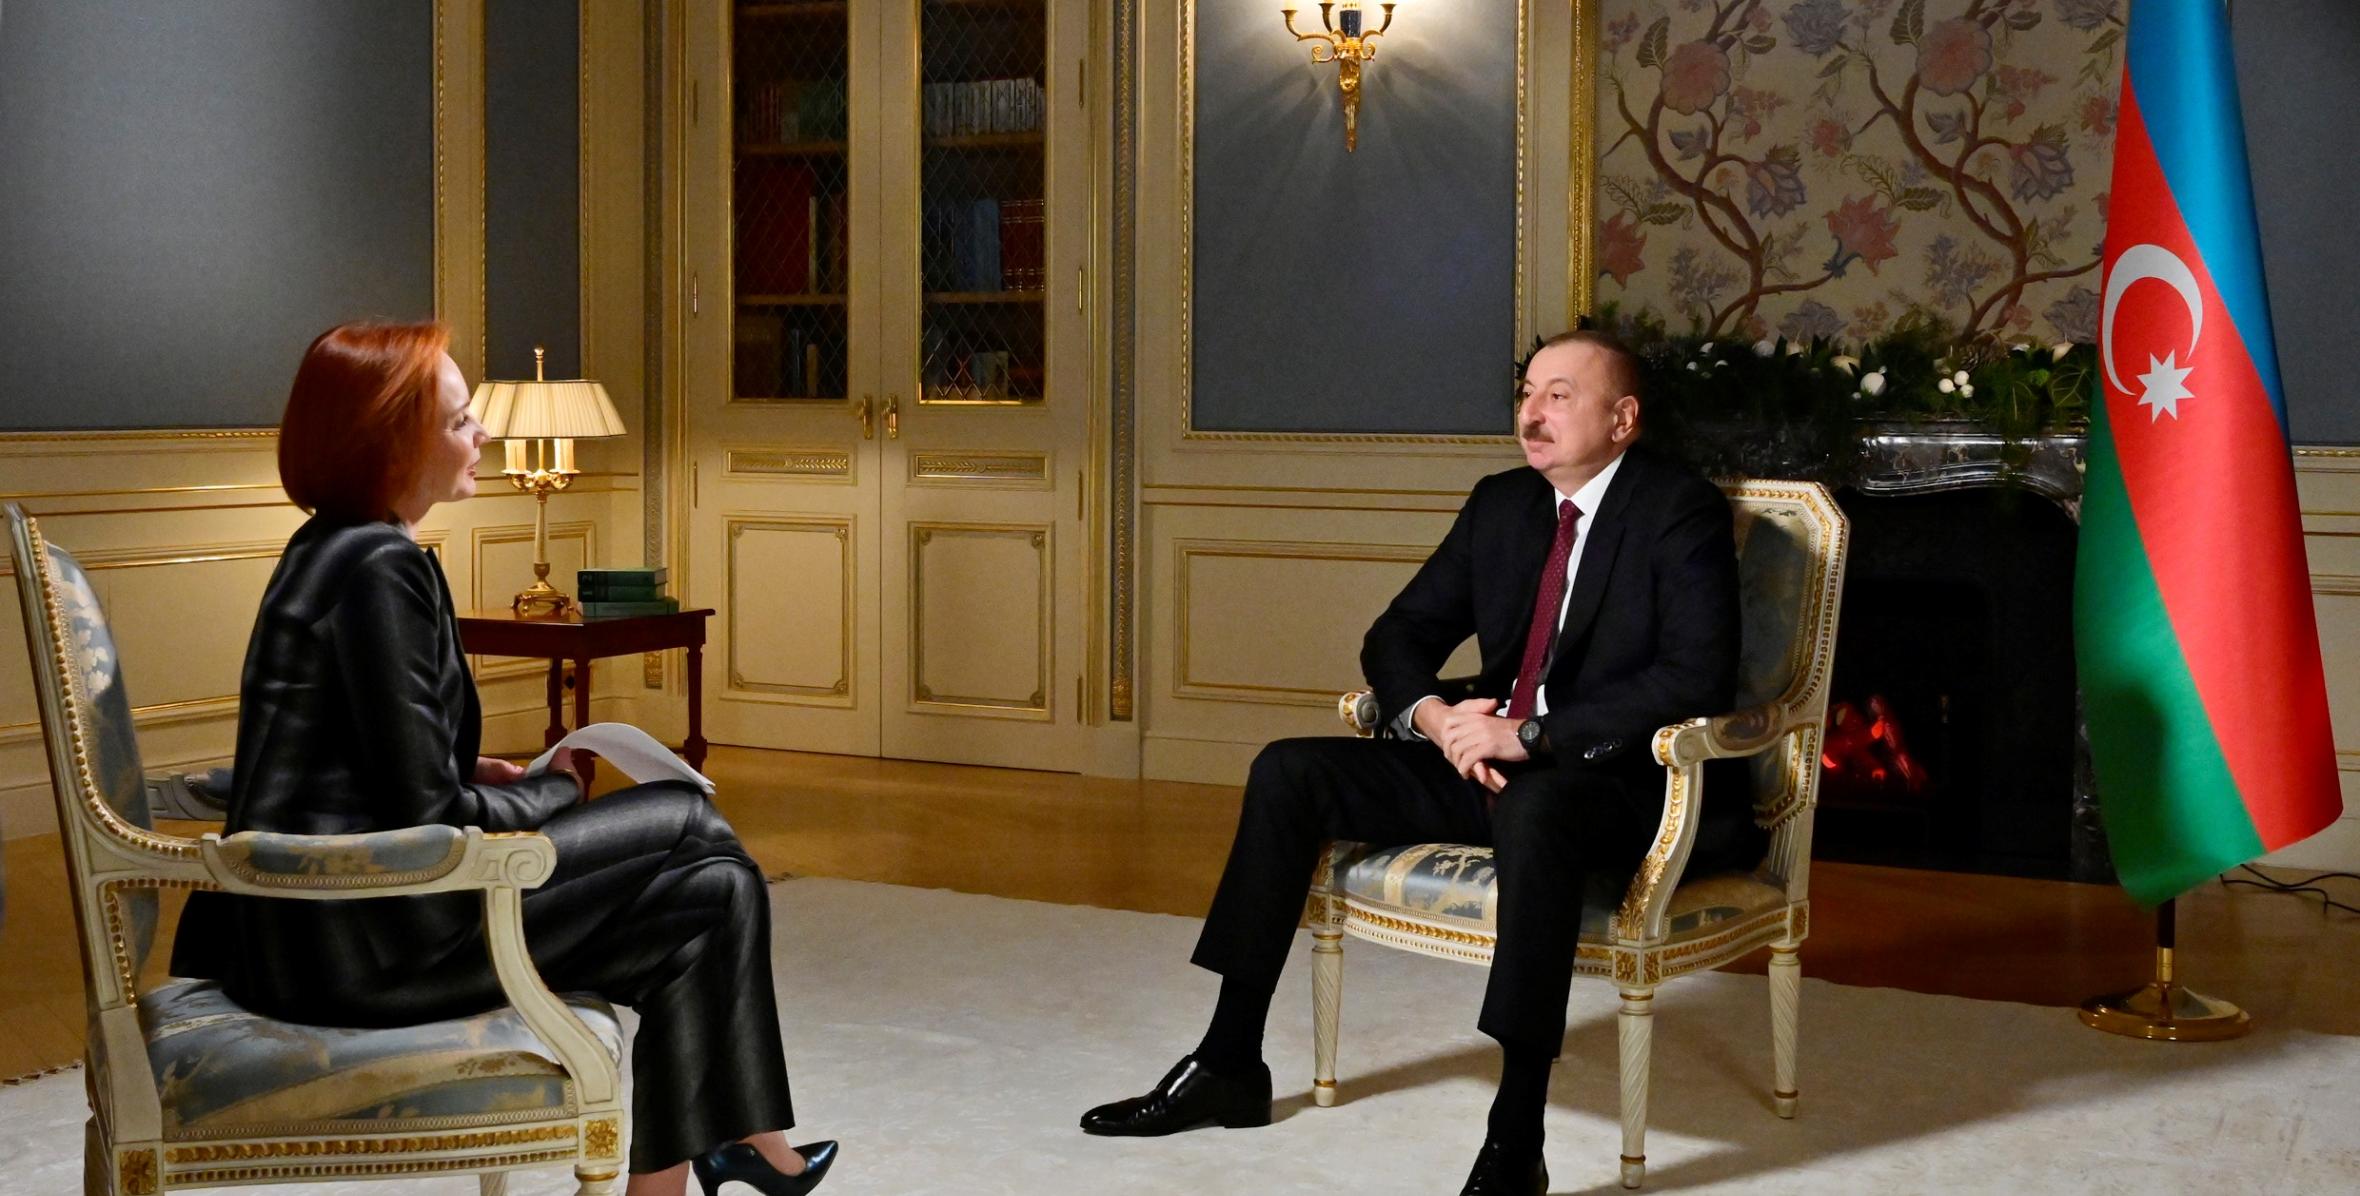 Ilham Aliyev was interviewed by Rossiya-24 TV channel